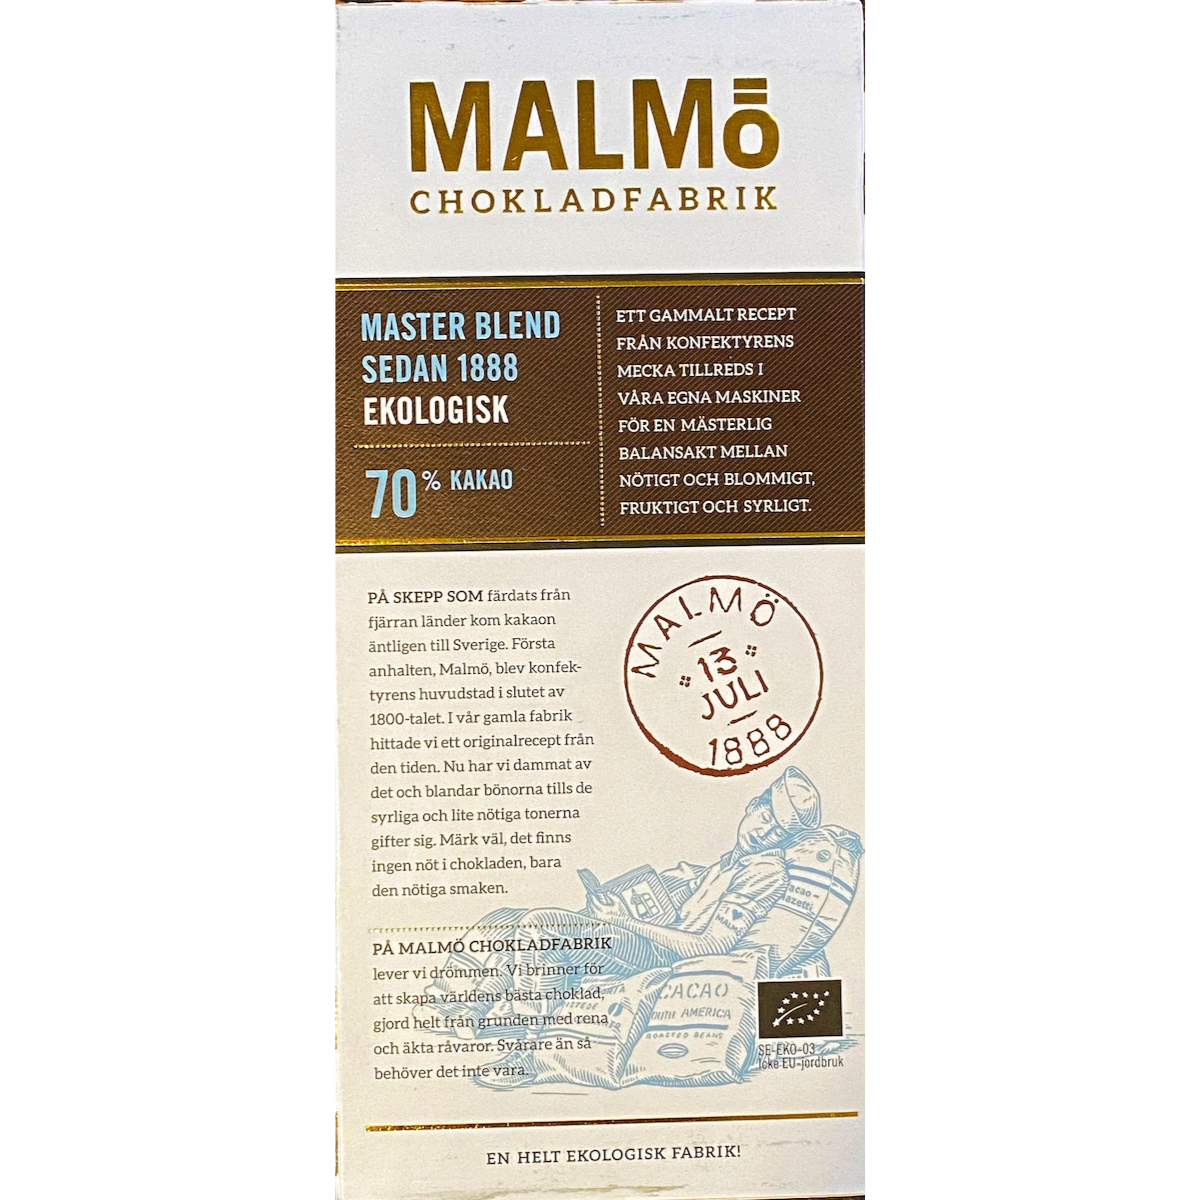 Malmö Chokladfabrik's Malmö Master Blend '